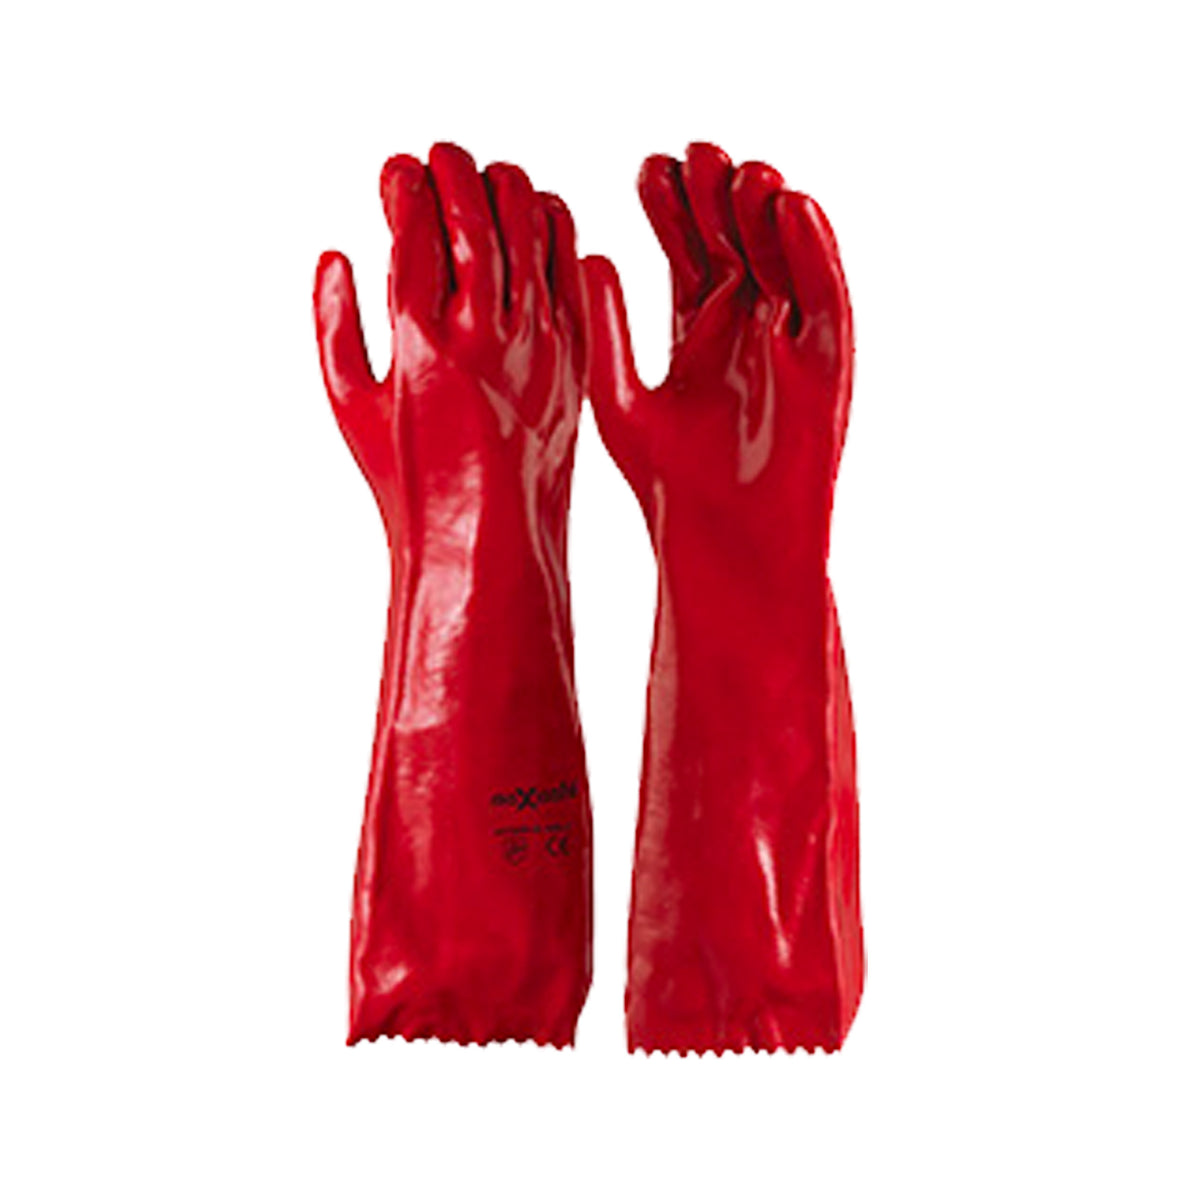 red pvc gauntlet gloves in 45cm